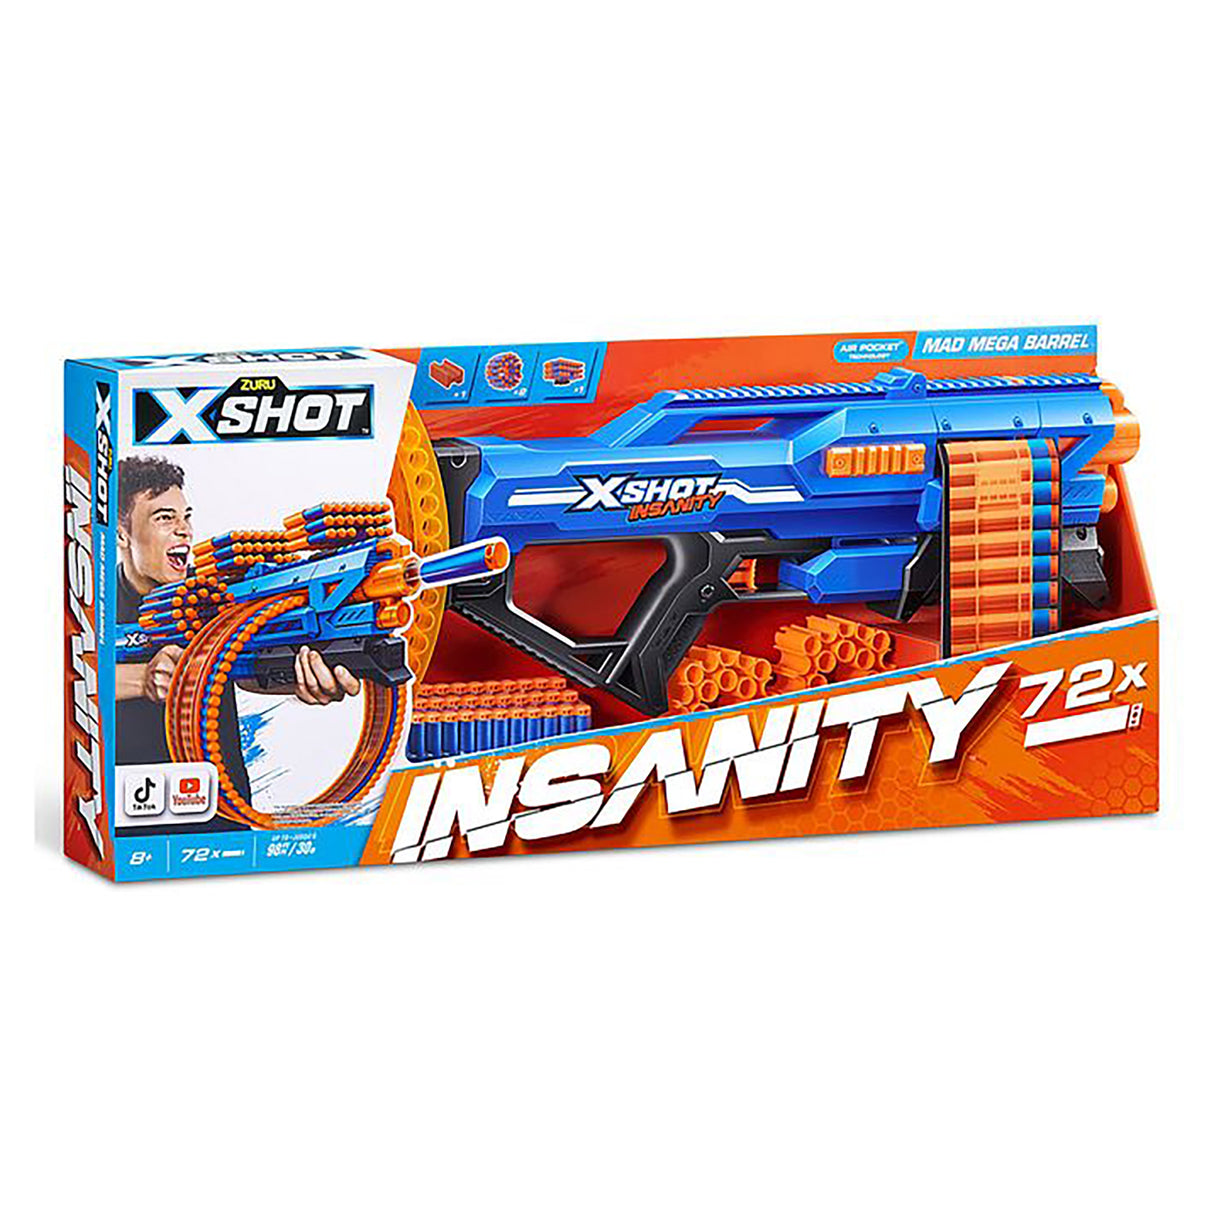 X-SHOT Insanity Mega Barrel